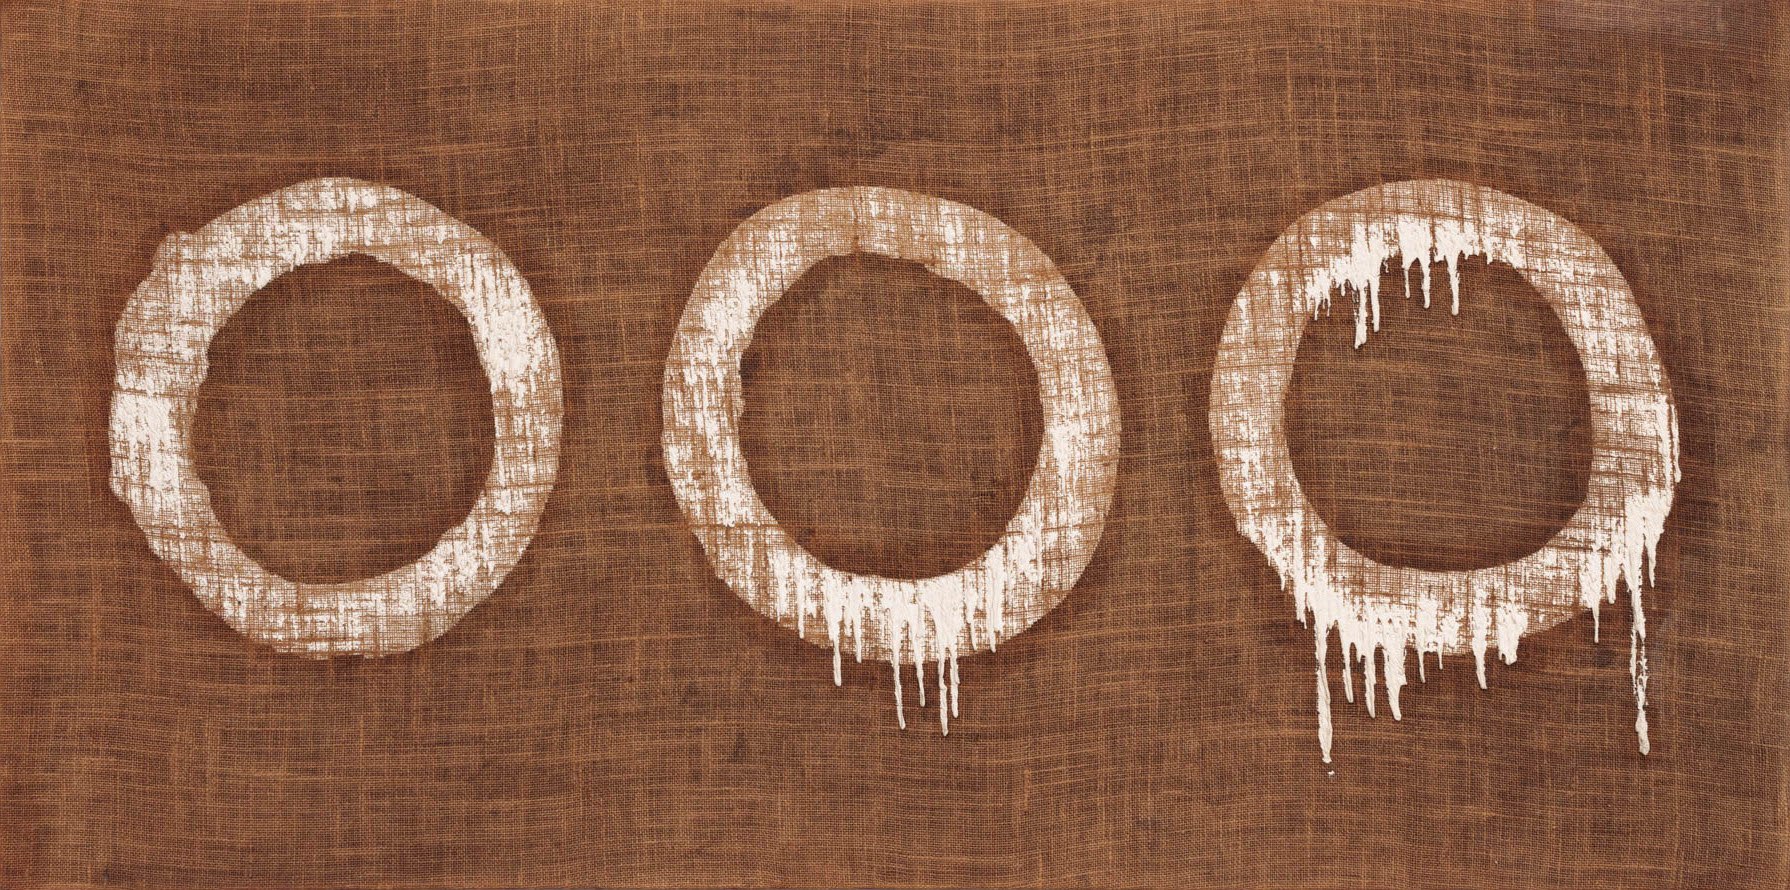 Ha Chong-Hyun (b. 1935) Conjunction 79-79, 1979 Oil on hemp canvas 31 1/2 x 62 3/5 inches 80 x 159 cm